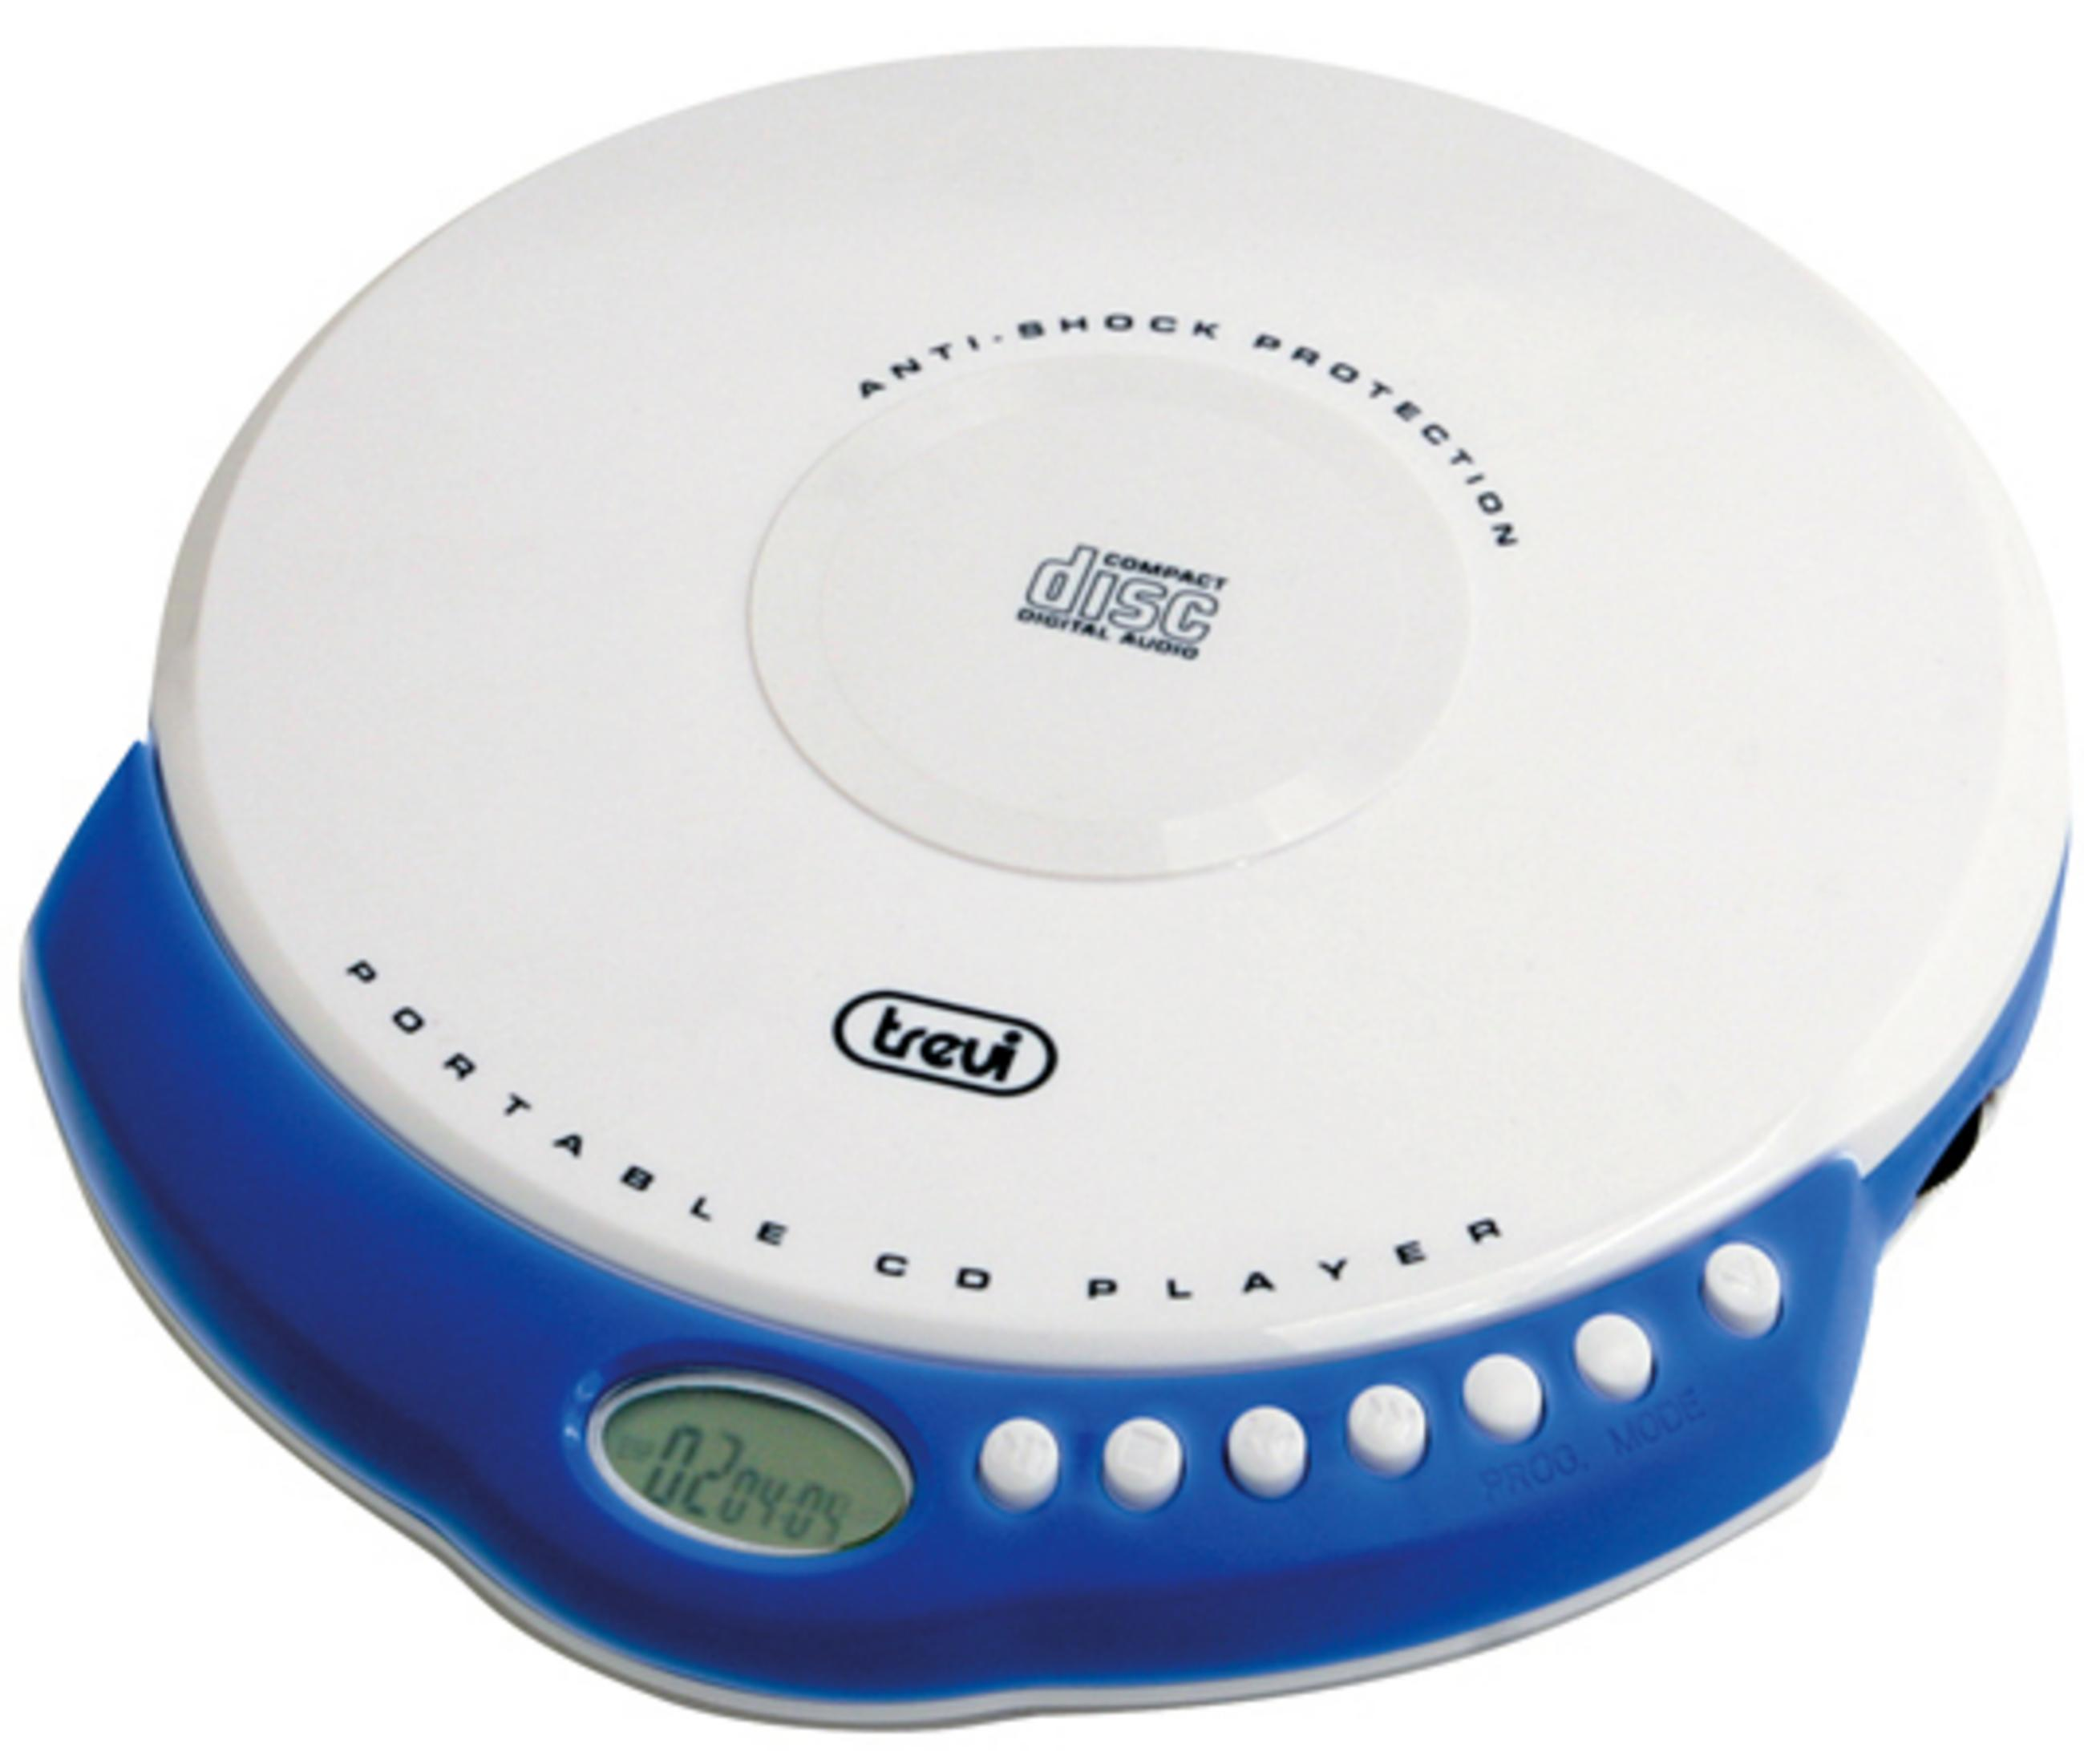 Player CD/MP3-PLAYER Tragbarer TREVI 498 Weiß/Blau CD WHITE PORTABLE CMP